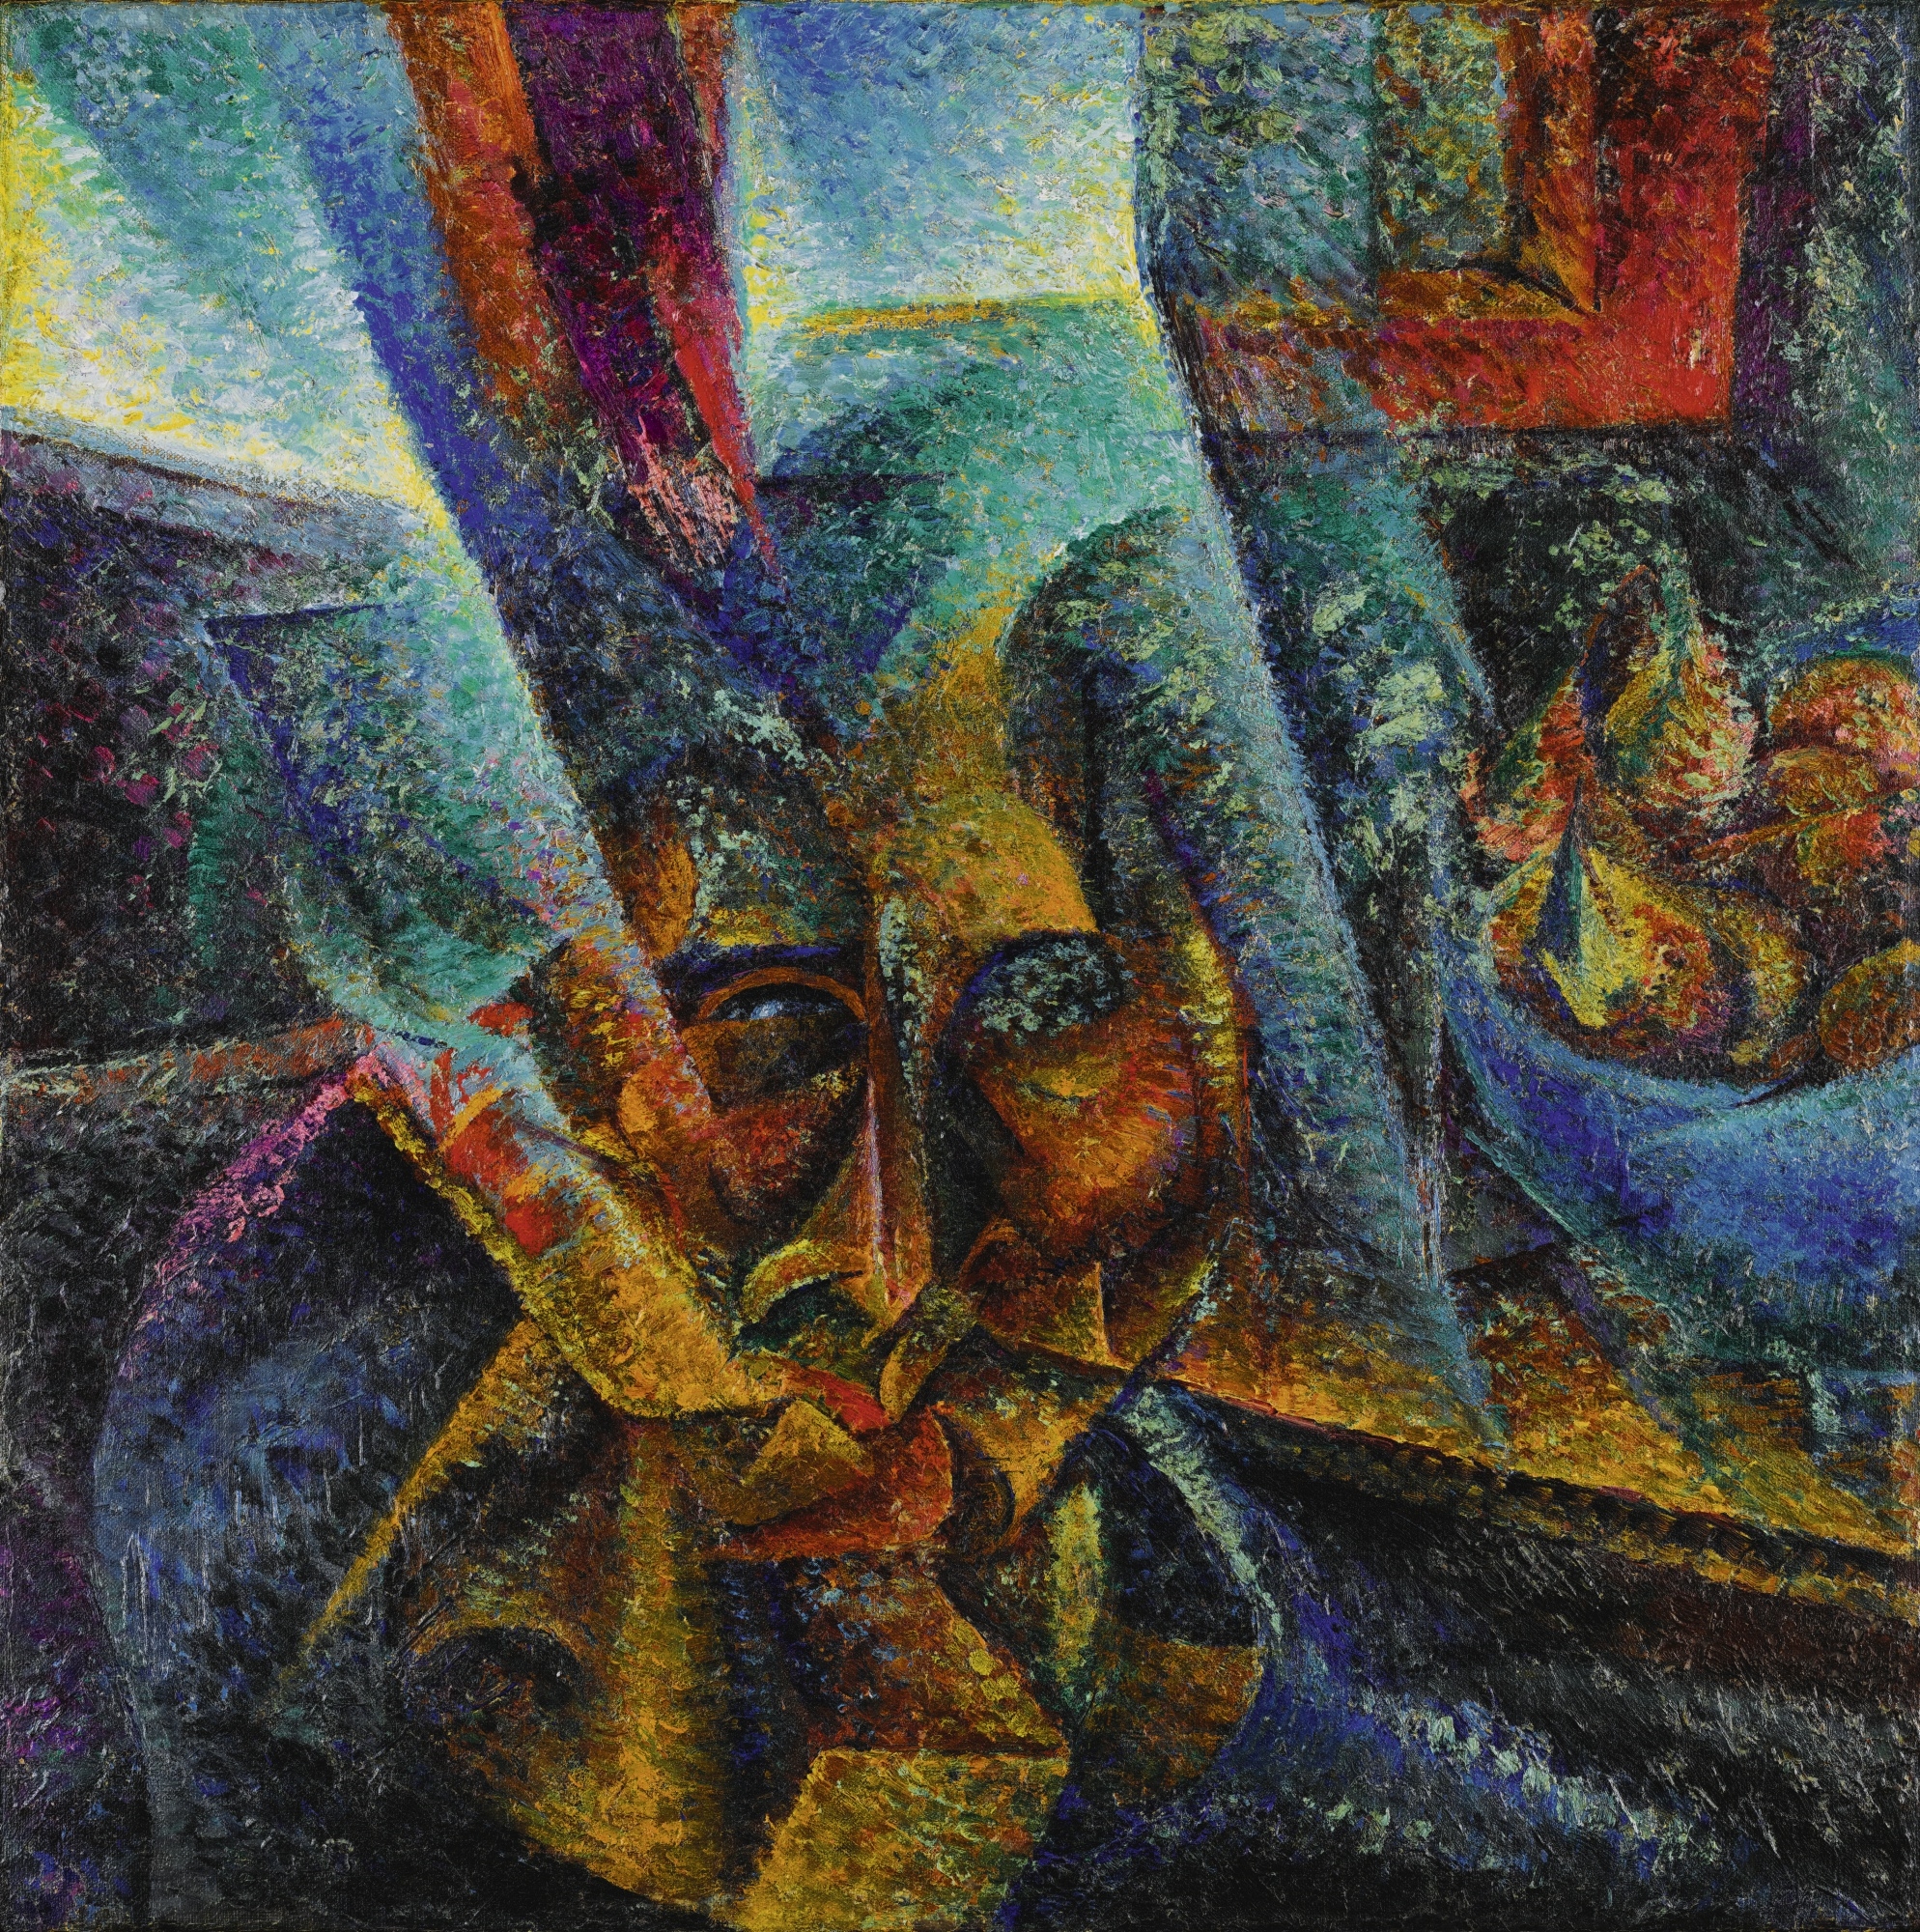 TESTA + LUCE + AMBIENTE by Umberto Boccioni, 1912